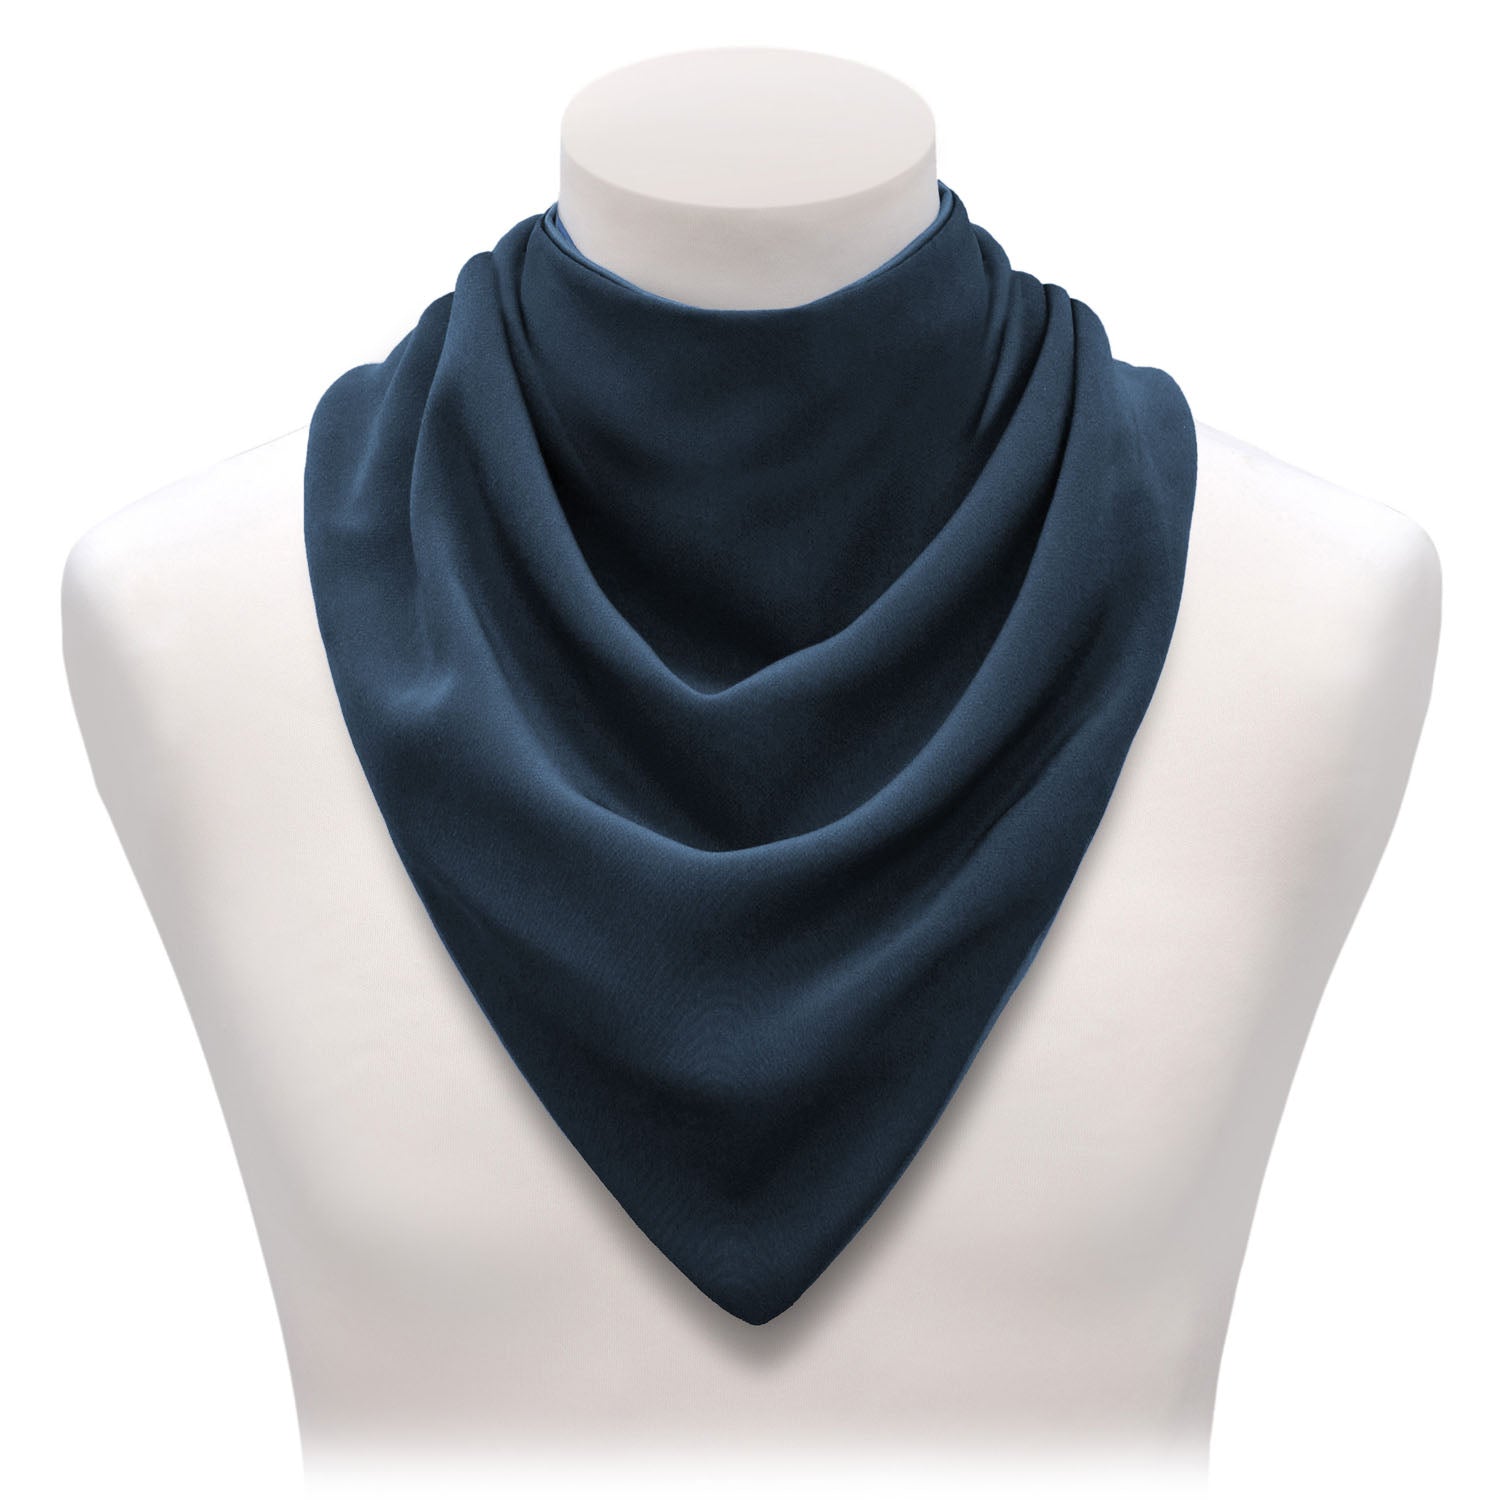 Large neckerchief style dribble bib - Steel Blue (UK VAT Exempt) | Health Care | Care Designs